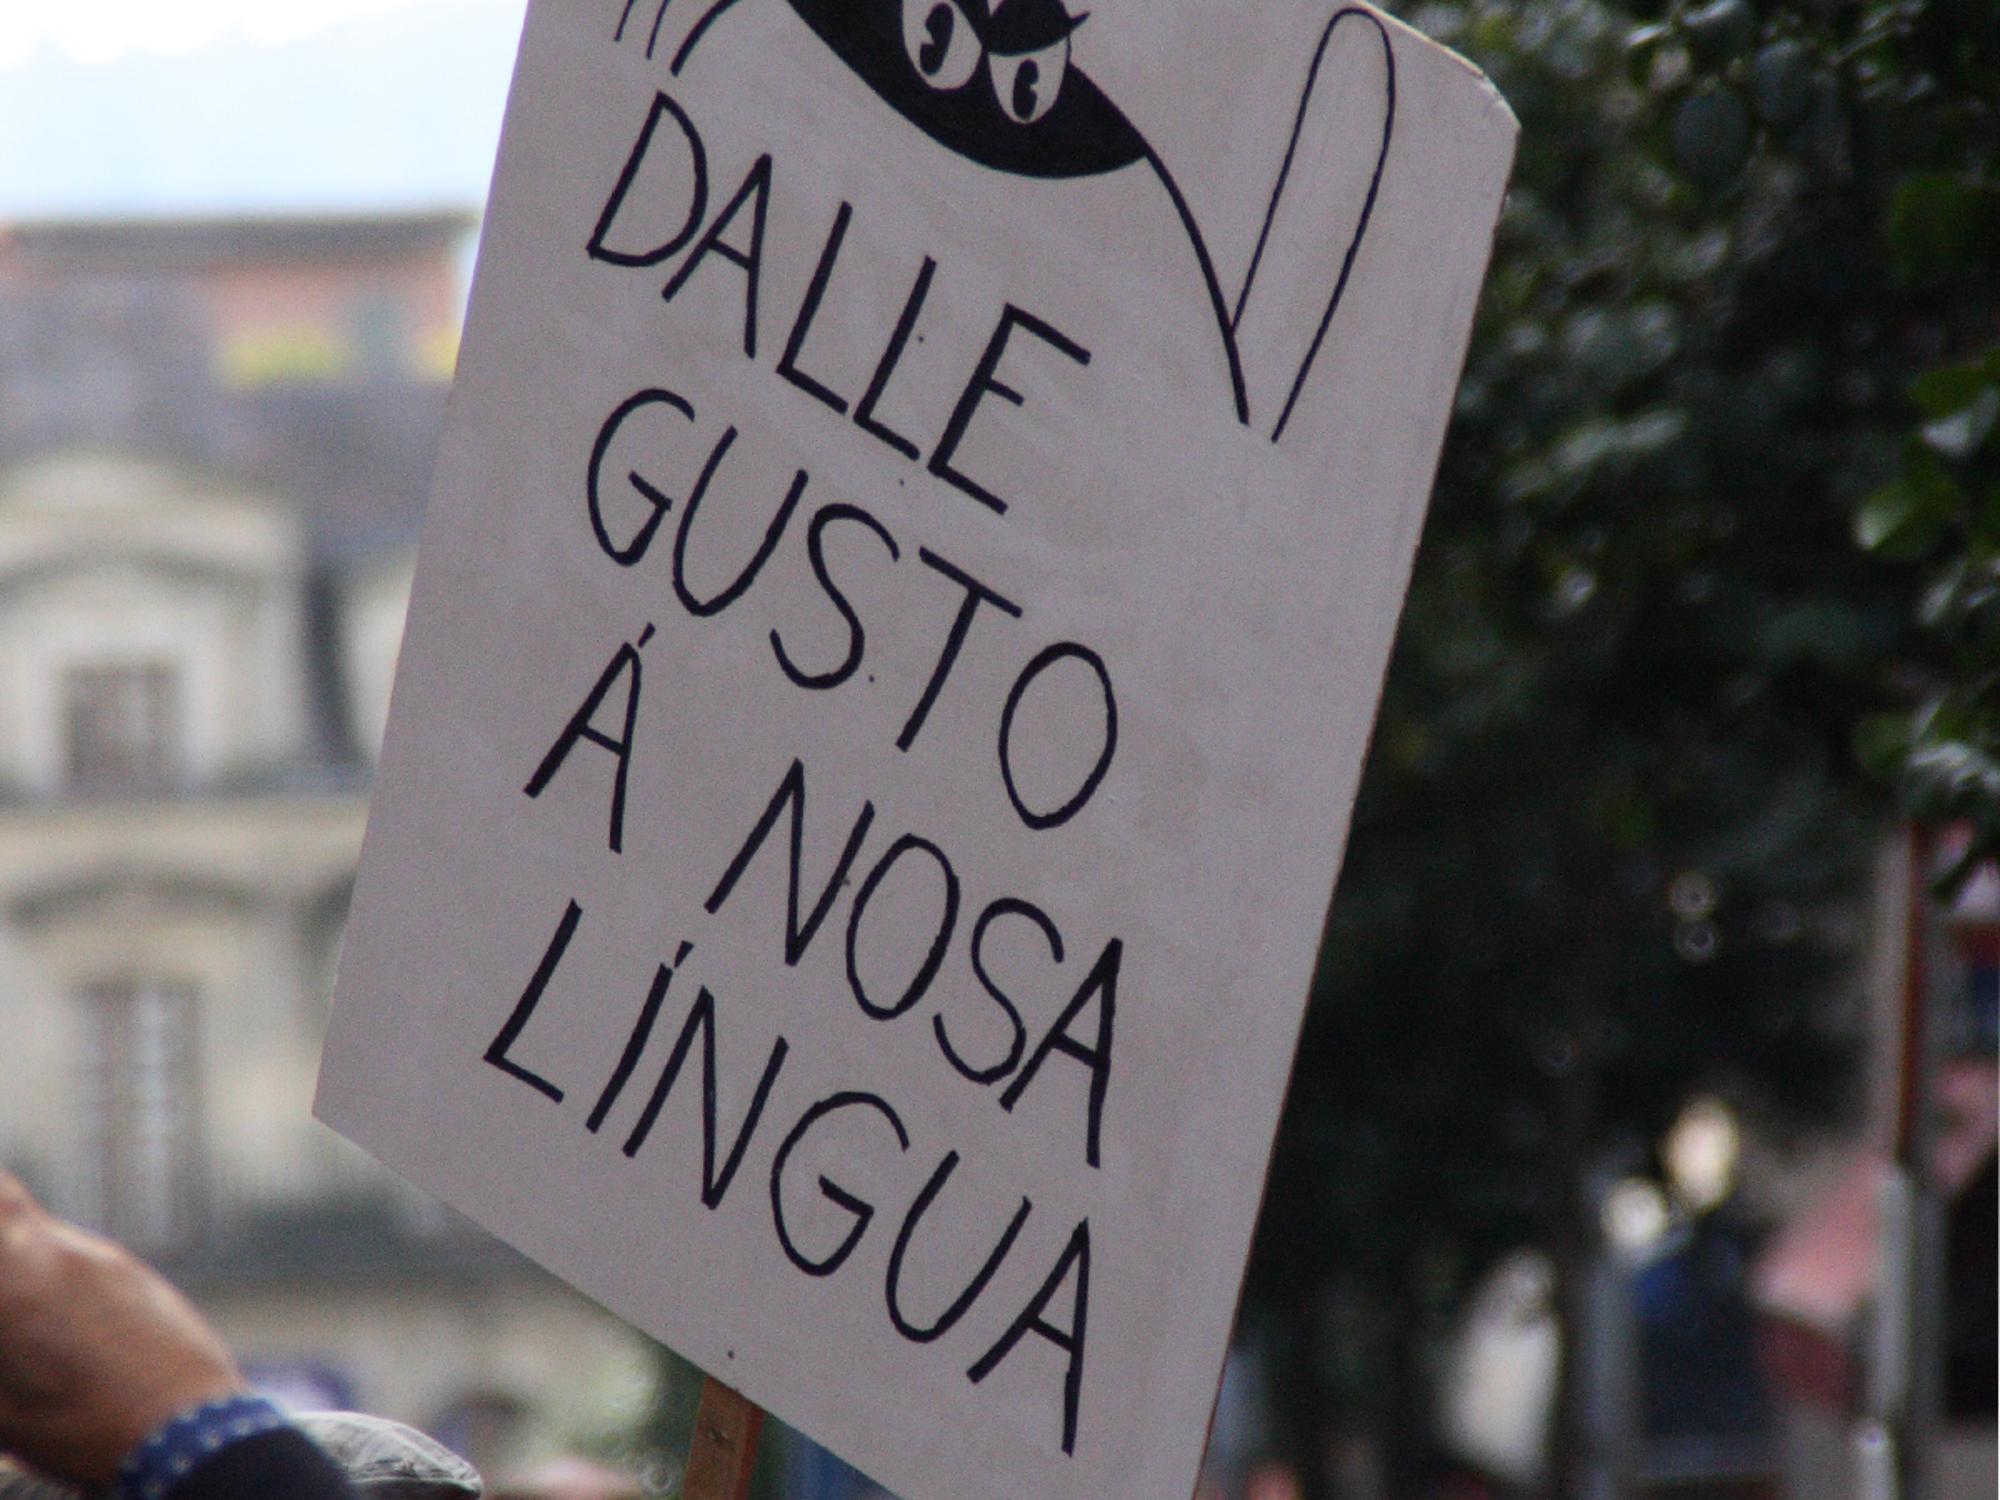 Pancarta-galego-dalle-gusto-a-nosa-lingua